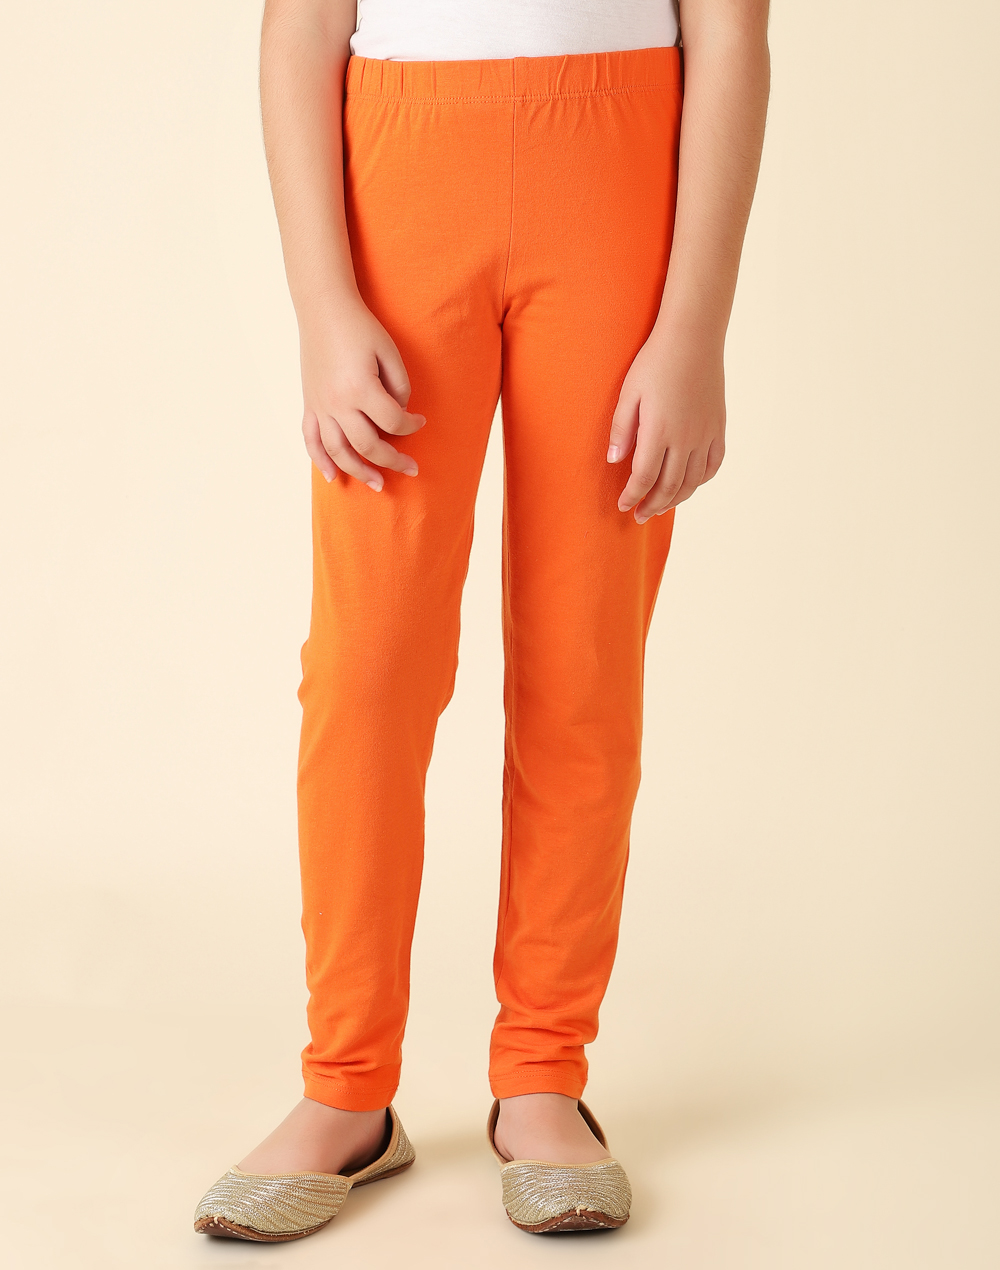 Orange Cotton Blend Legging